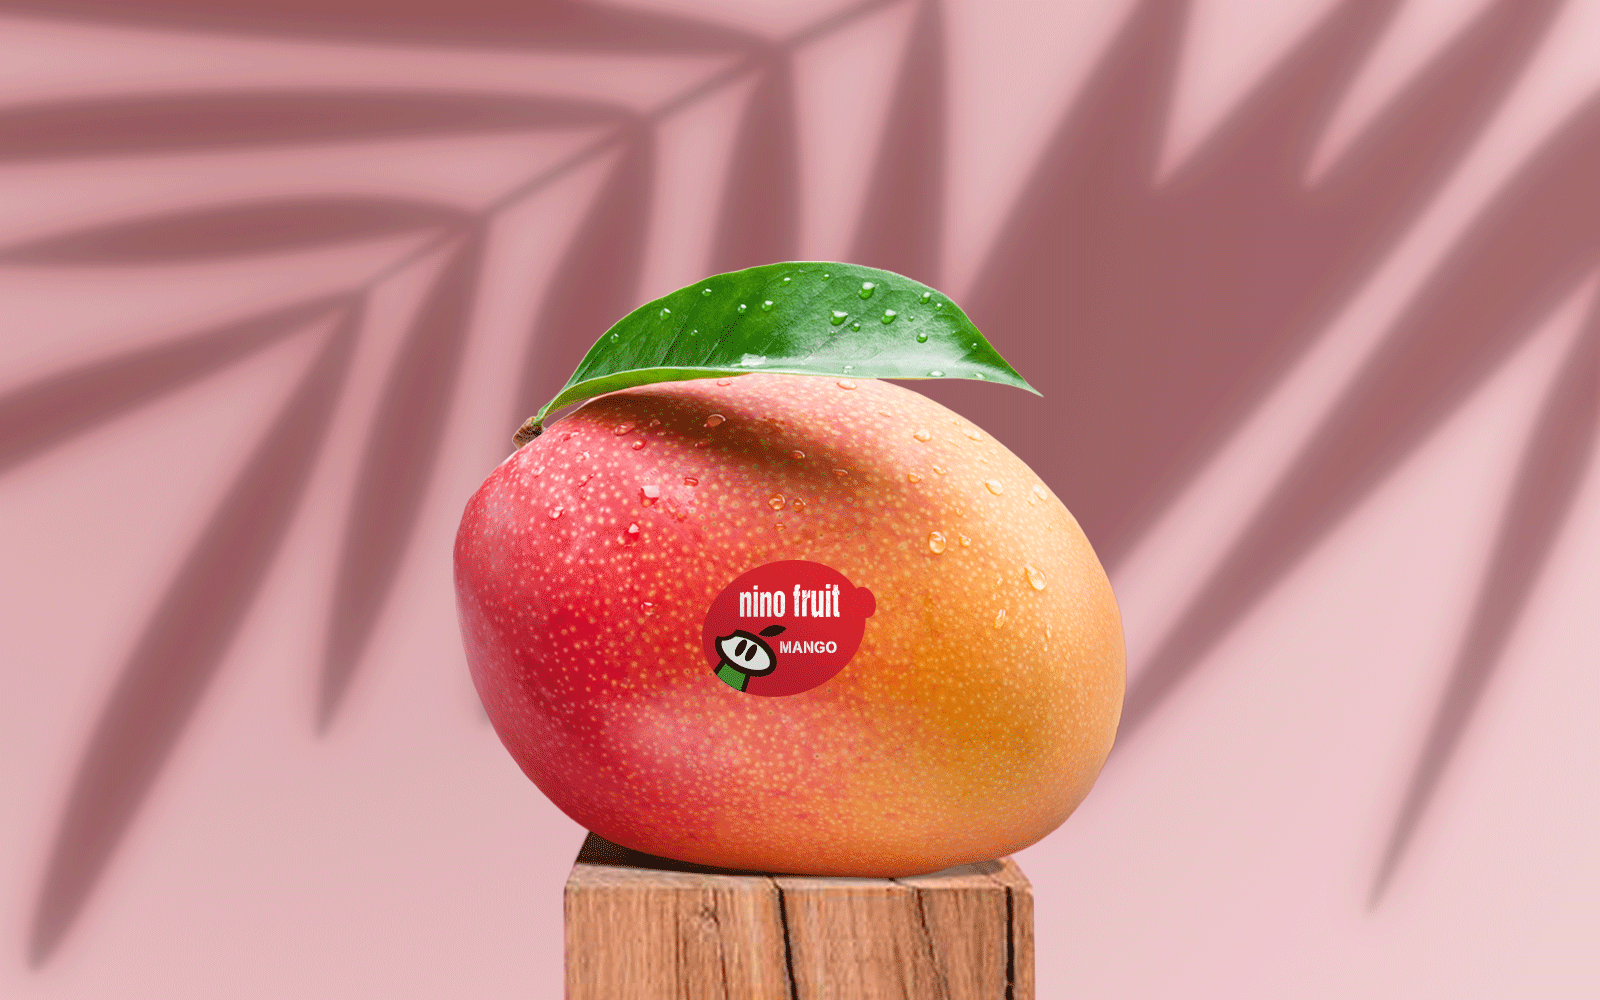 bob agency - Nino Fruit by Interweichert - Branding & Packaging